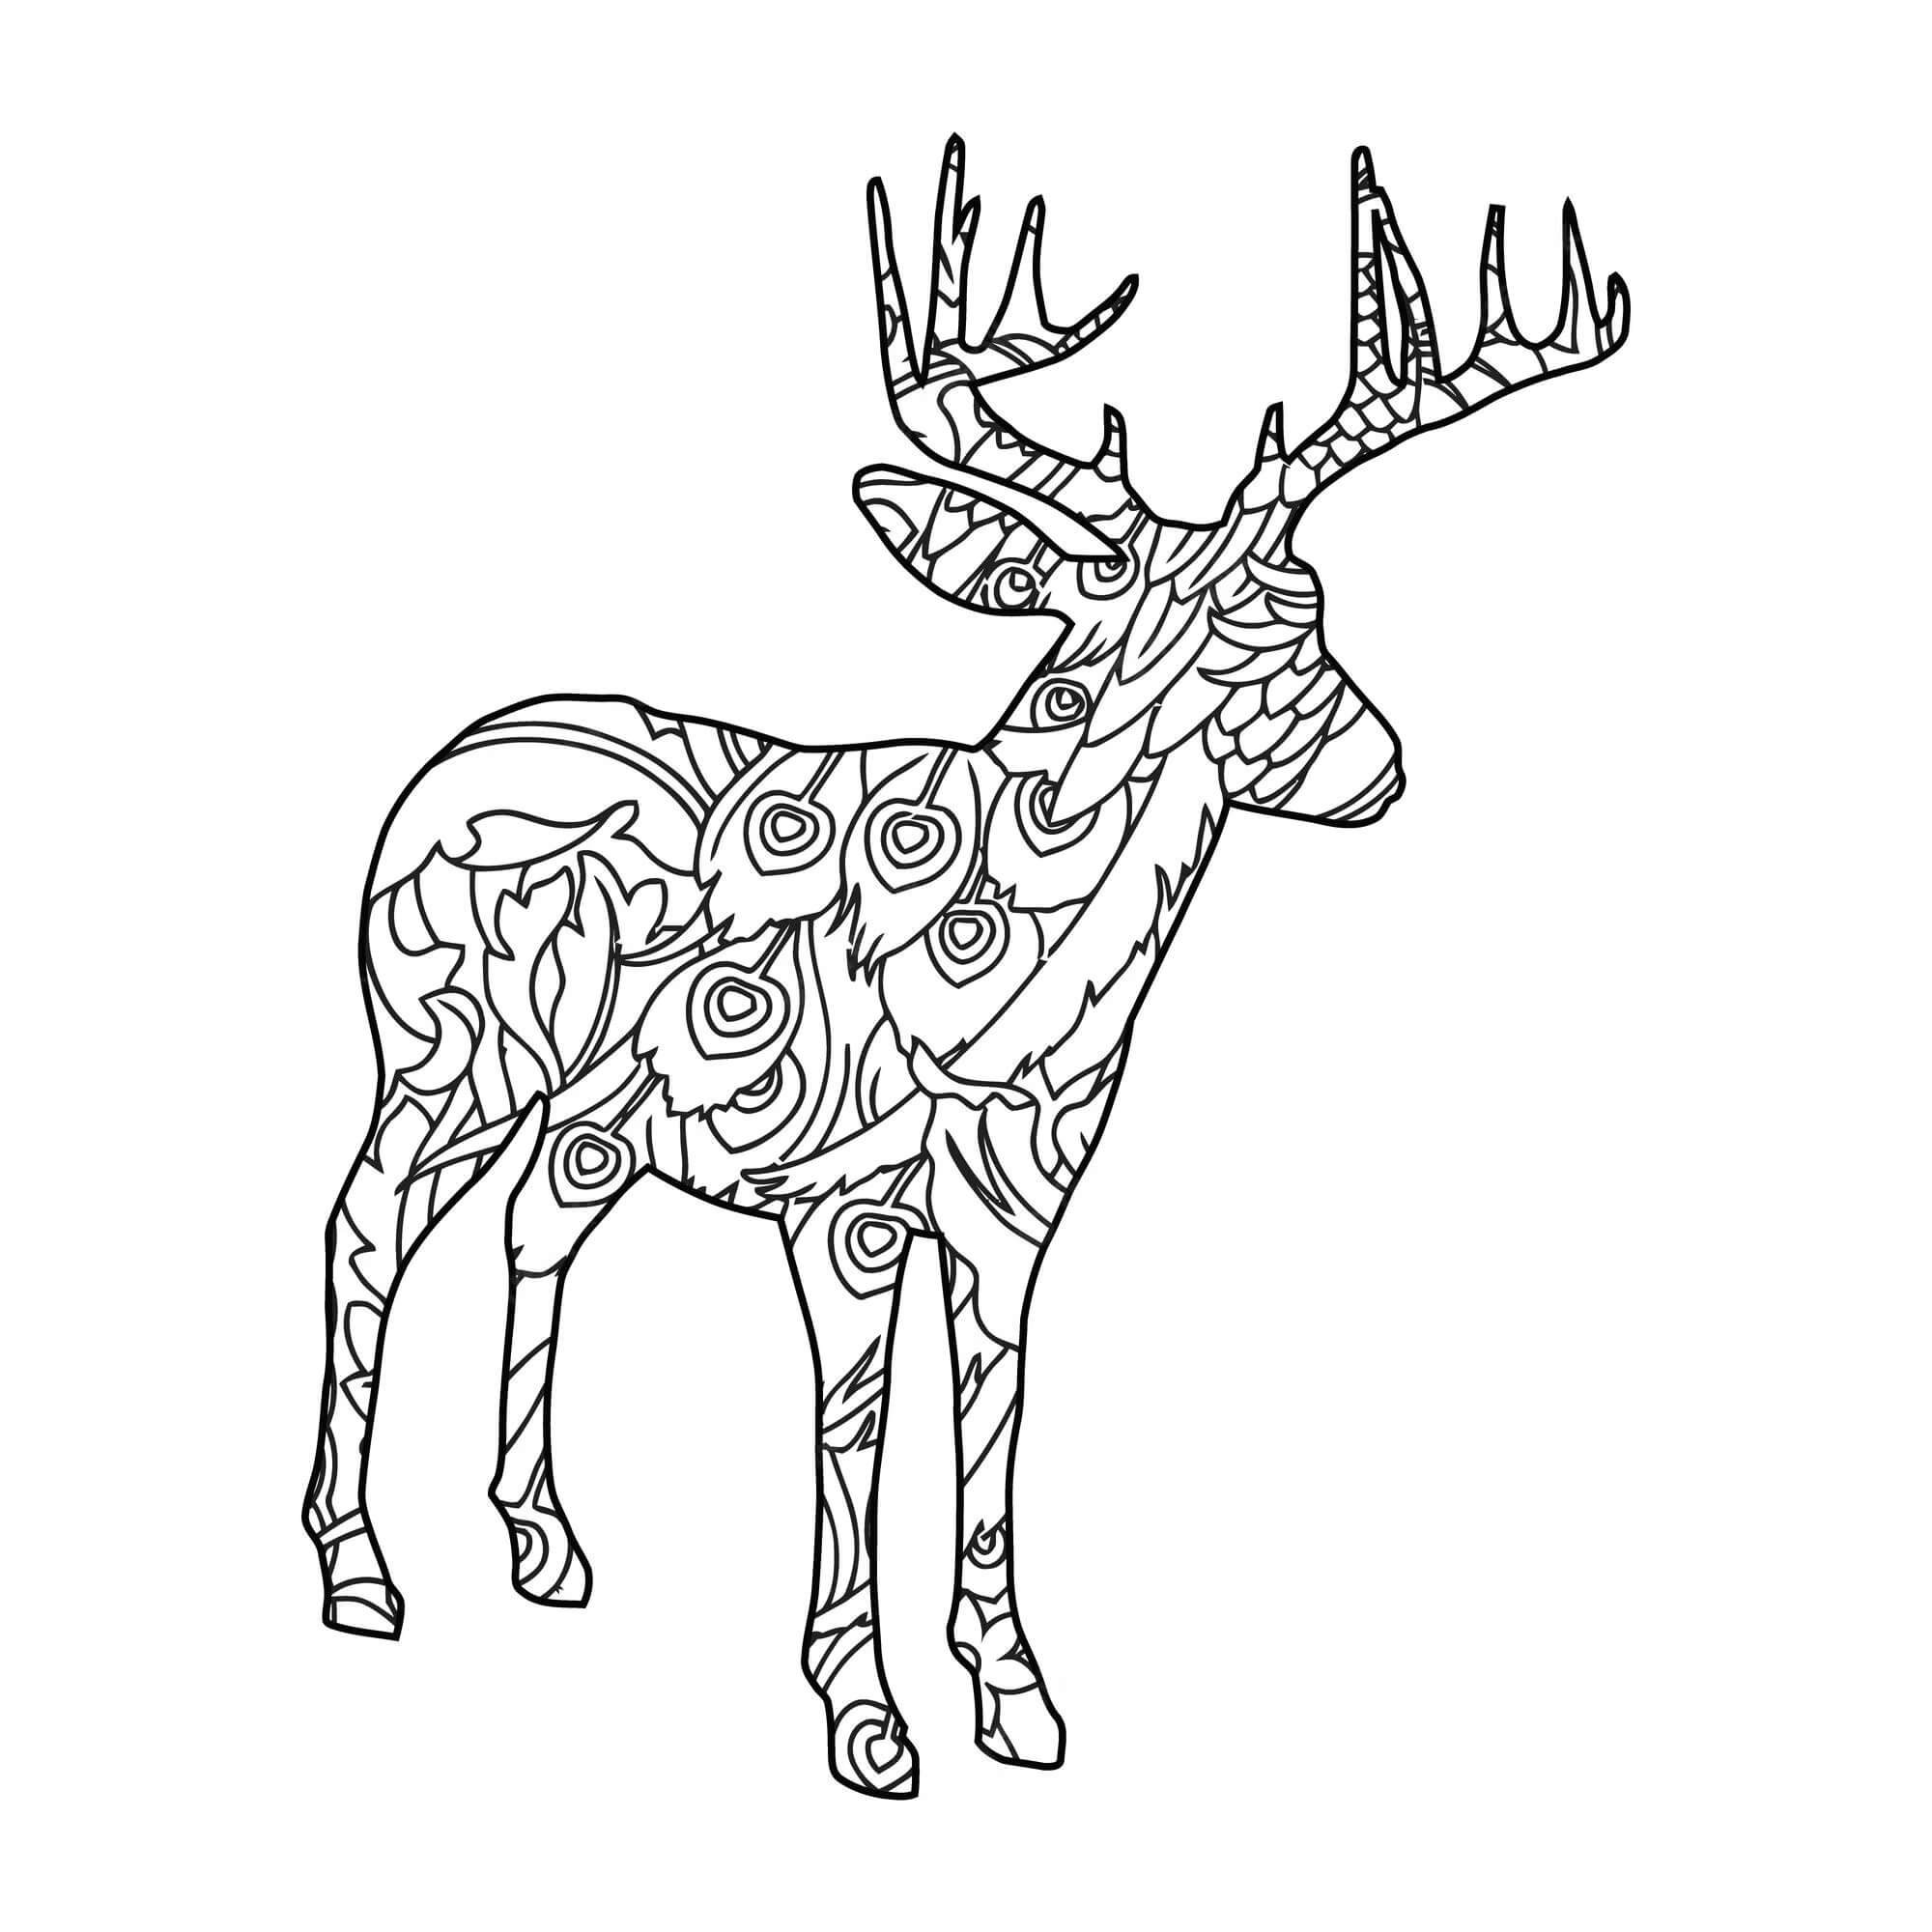 Mandala Deer Coloring Page - Sheet 7 Mandalas